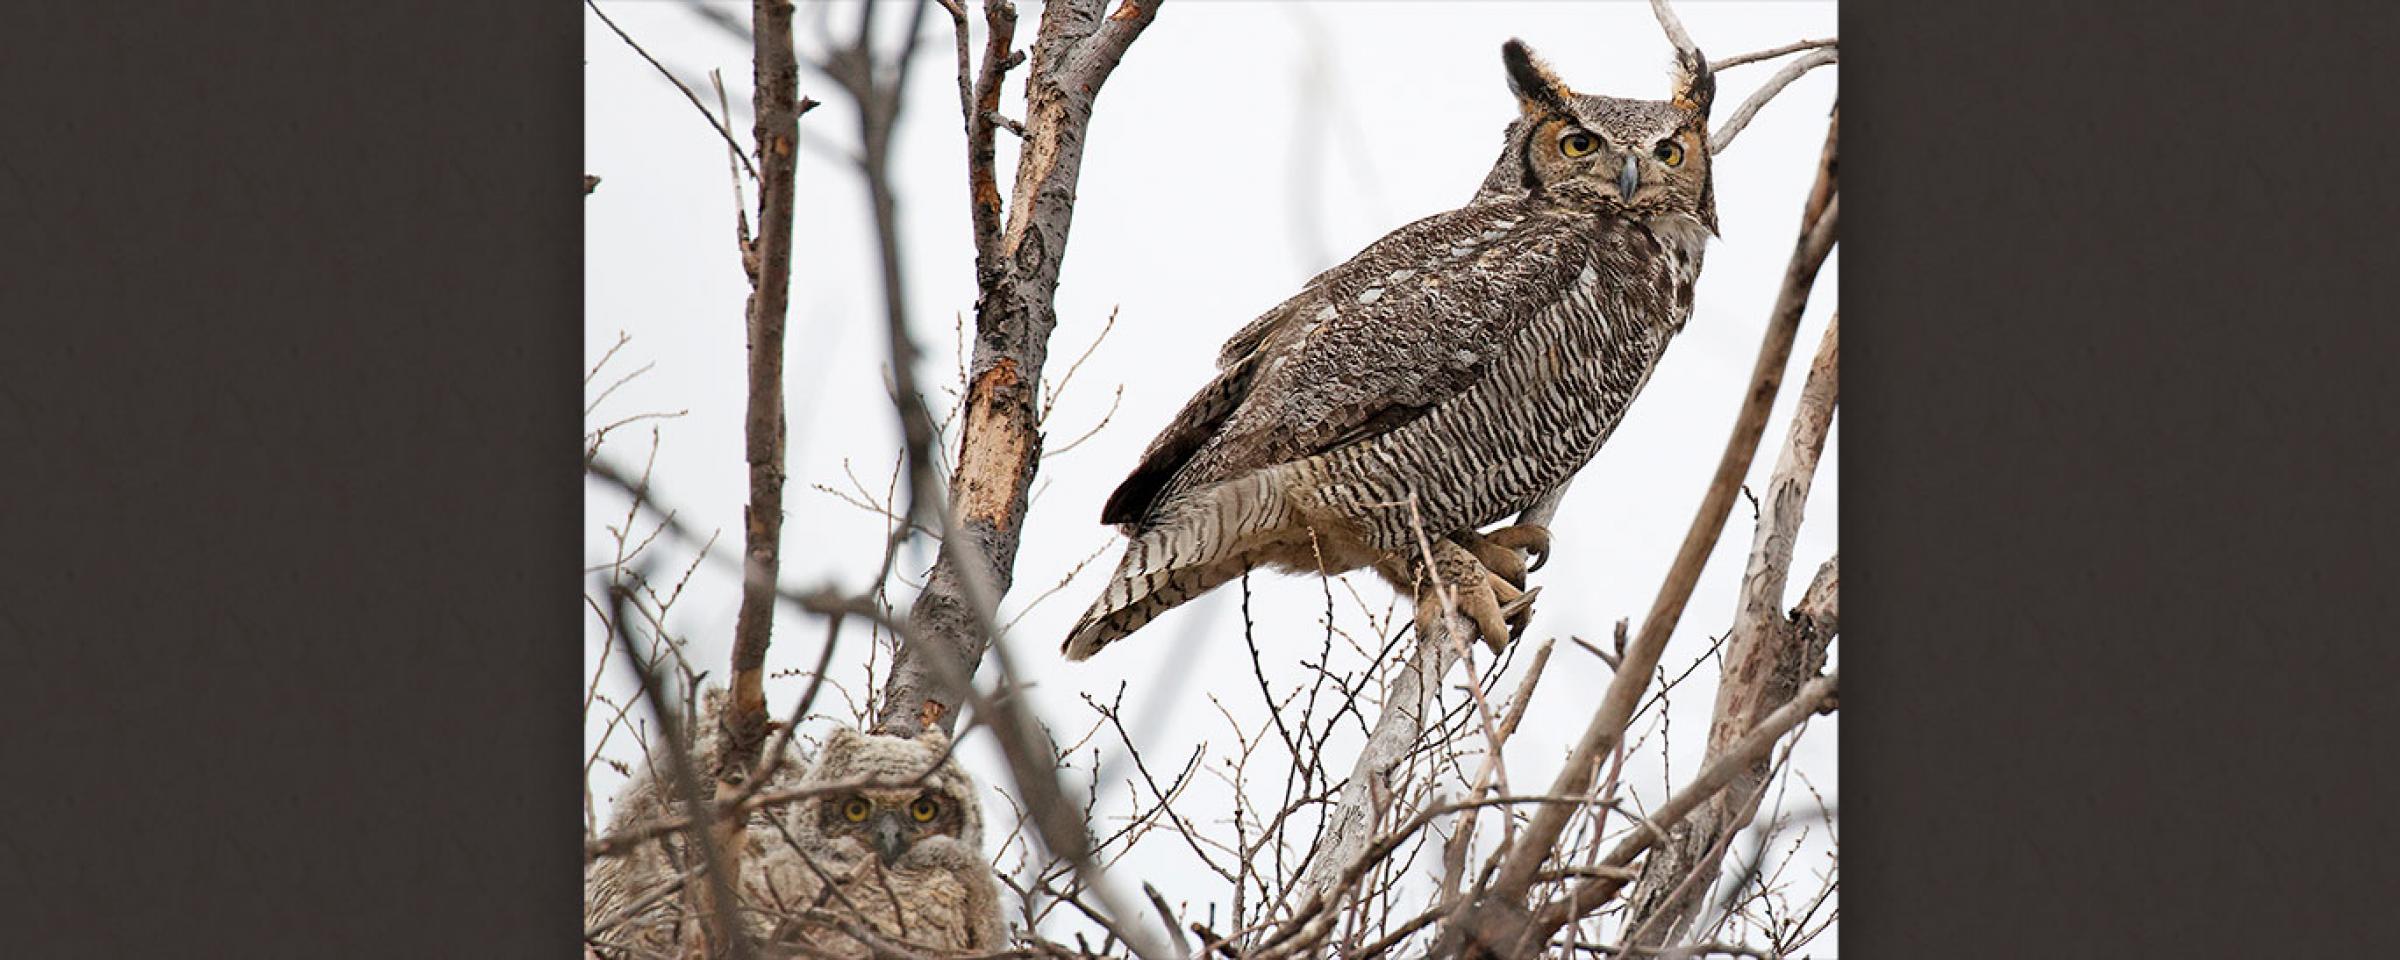 Great horned owls in nest